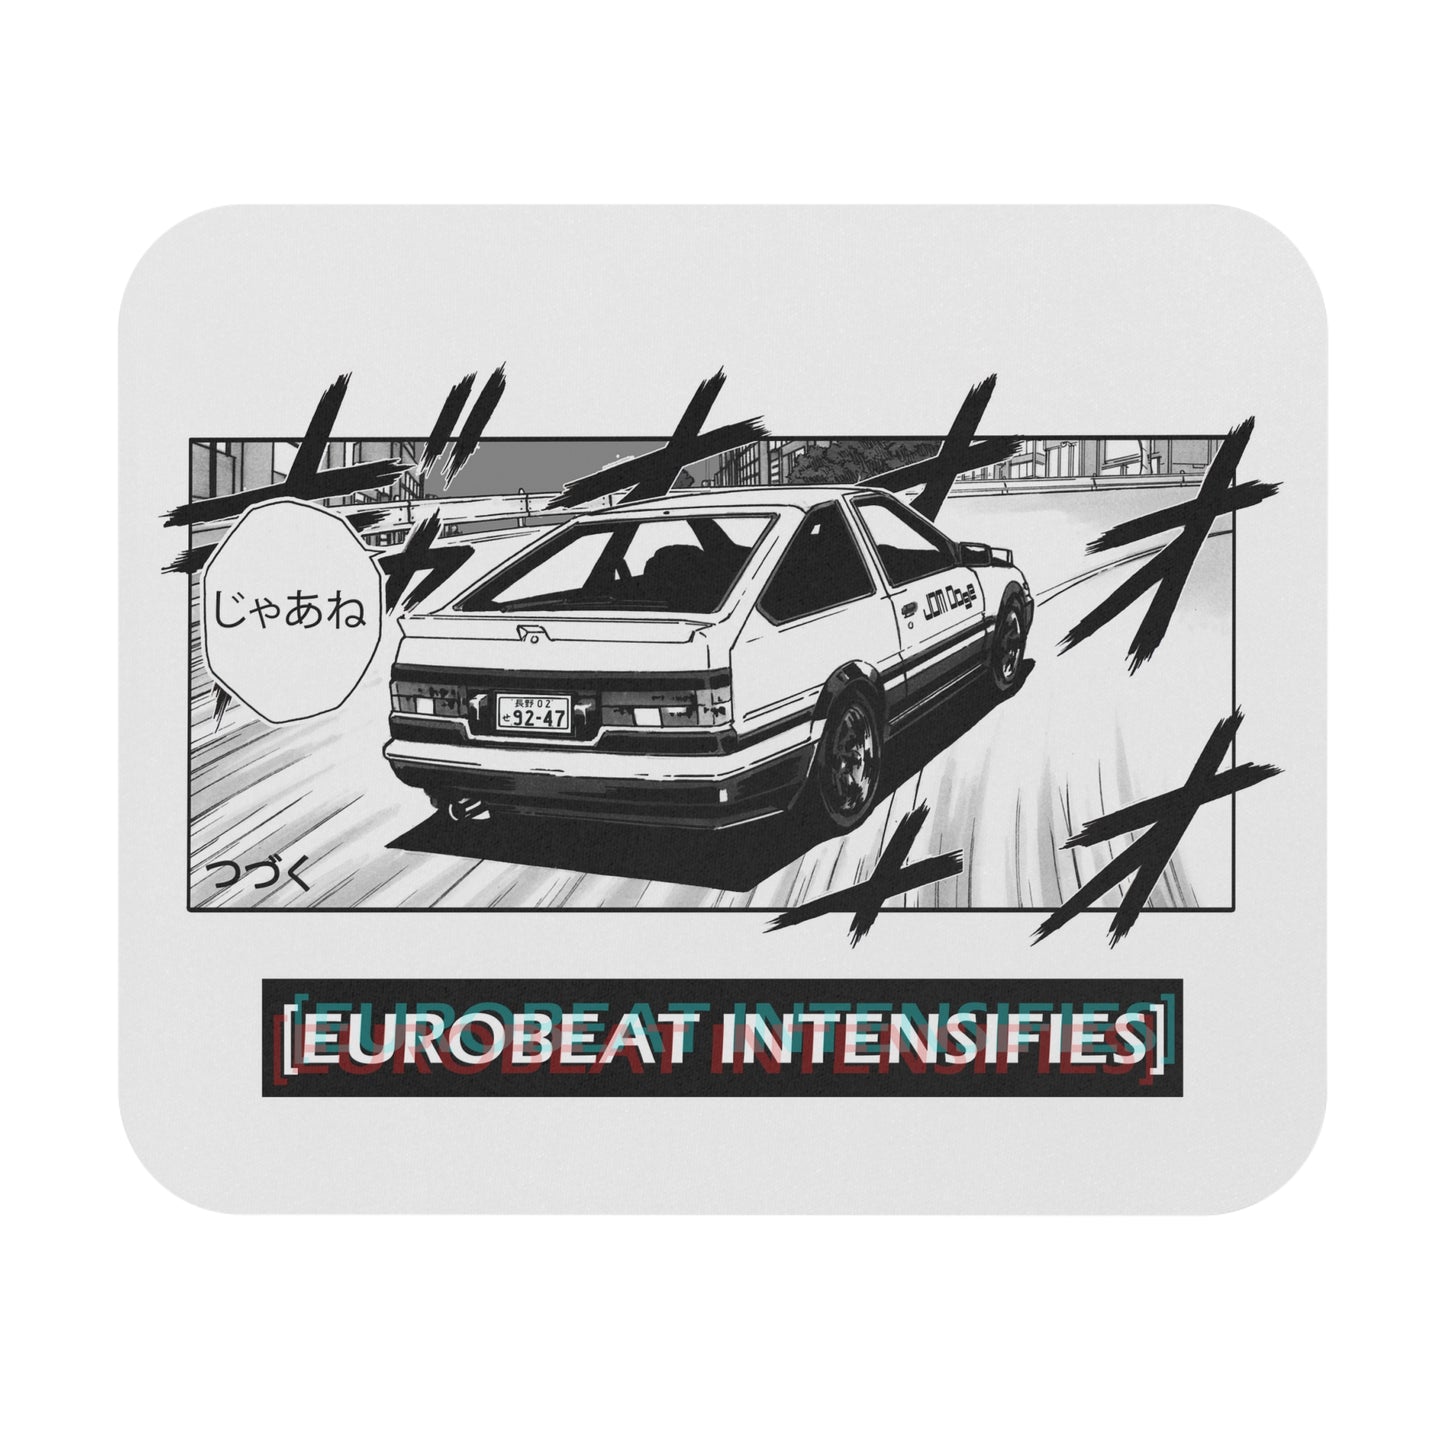 Eurobeat Intensifies Mouse Pad